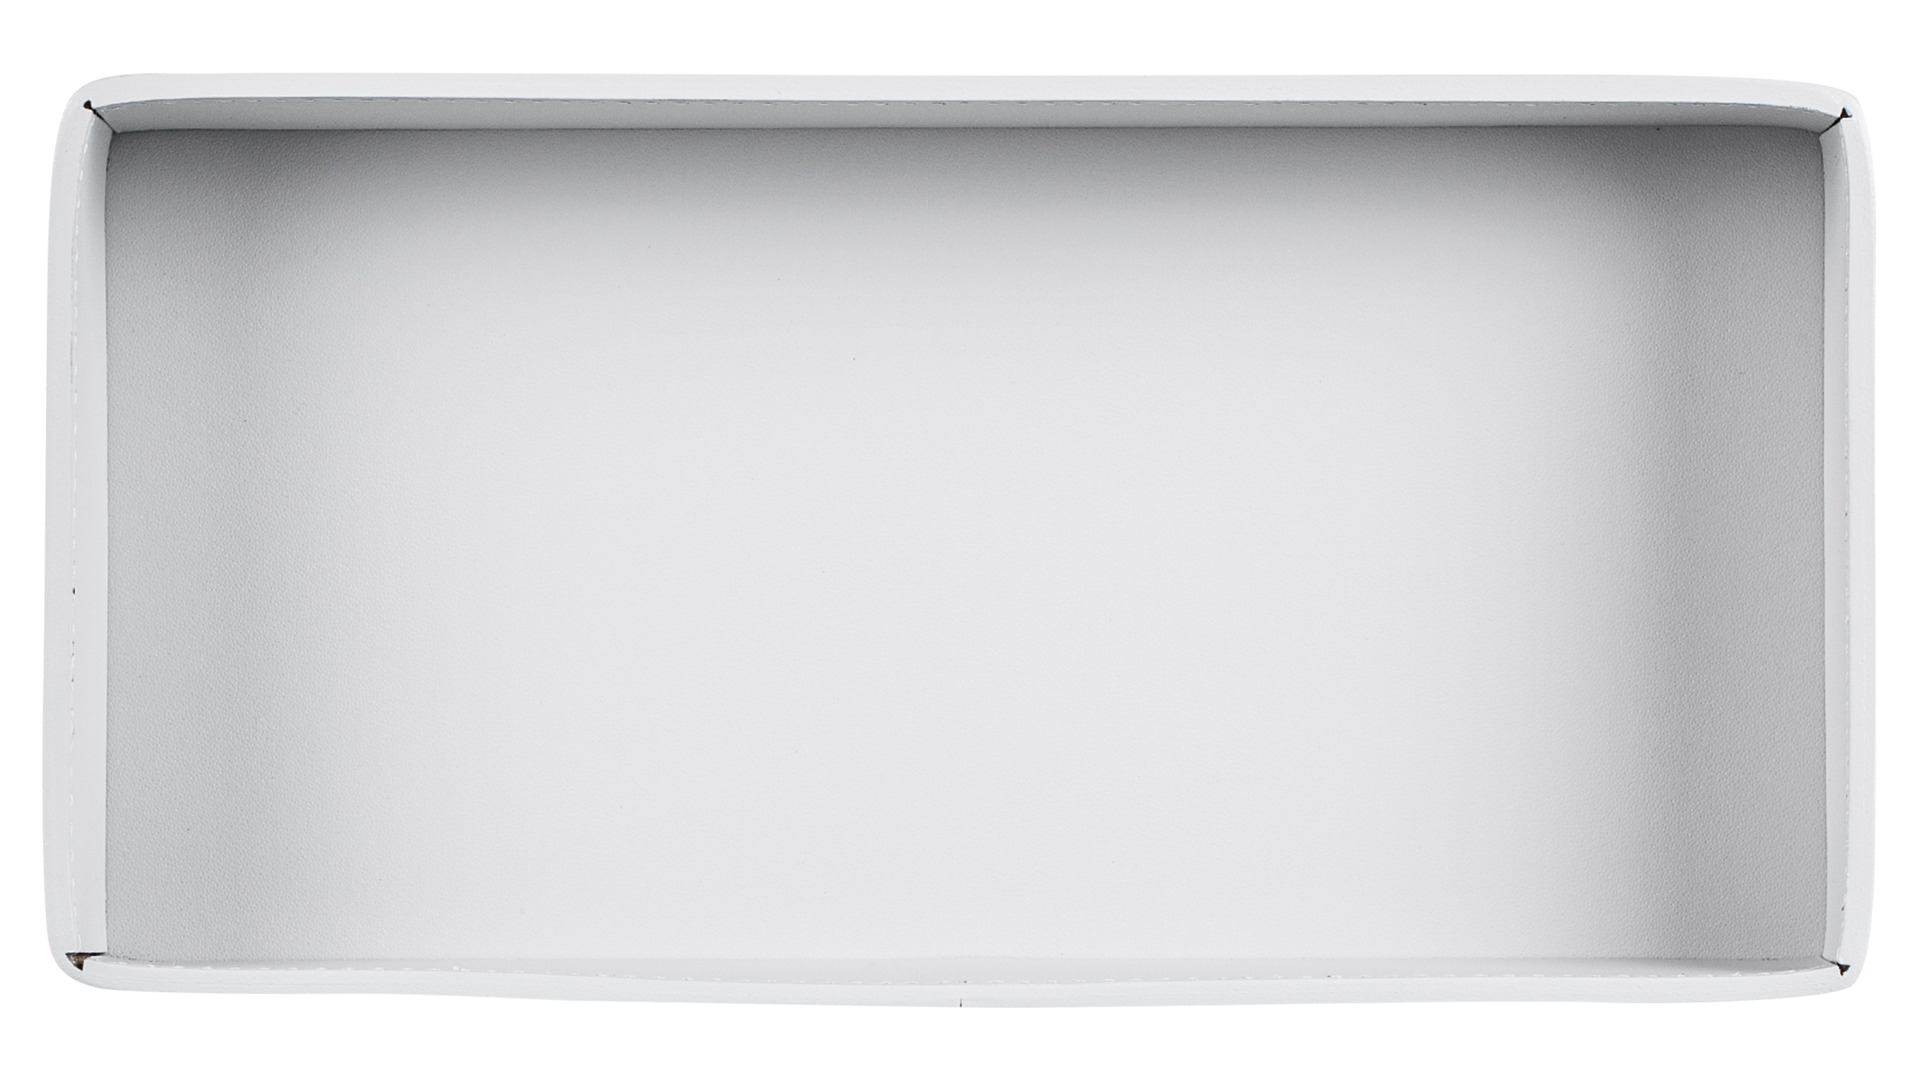 Мелочница прямоугольная Rudi Нарцисо 24,5х12,5 см, светло-серый